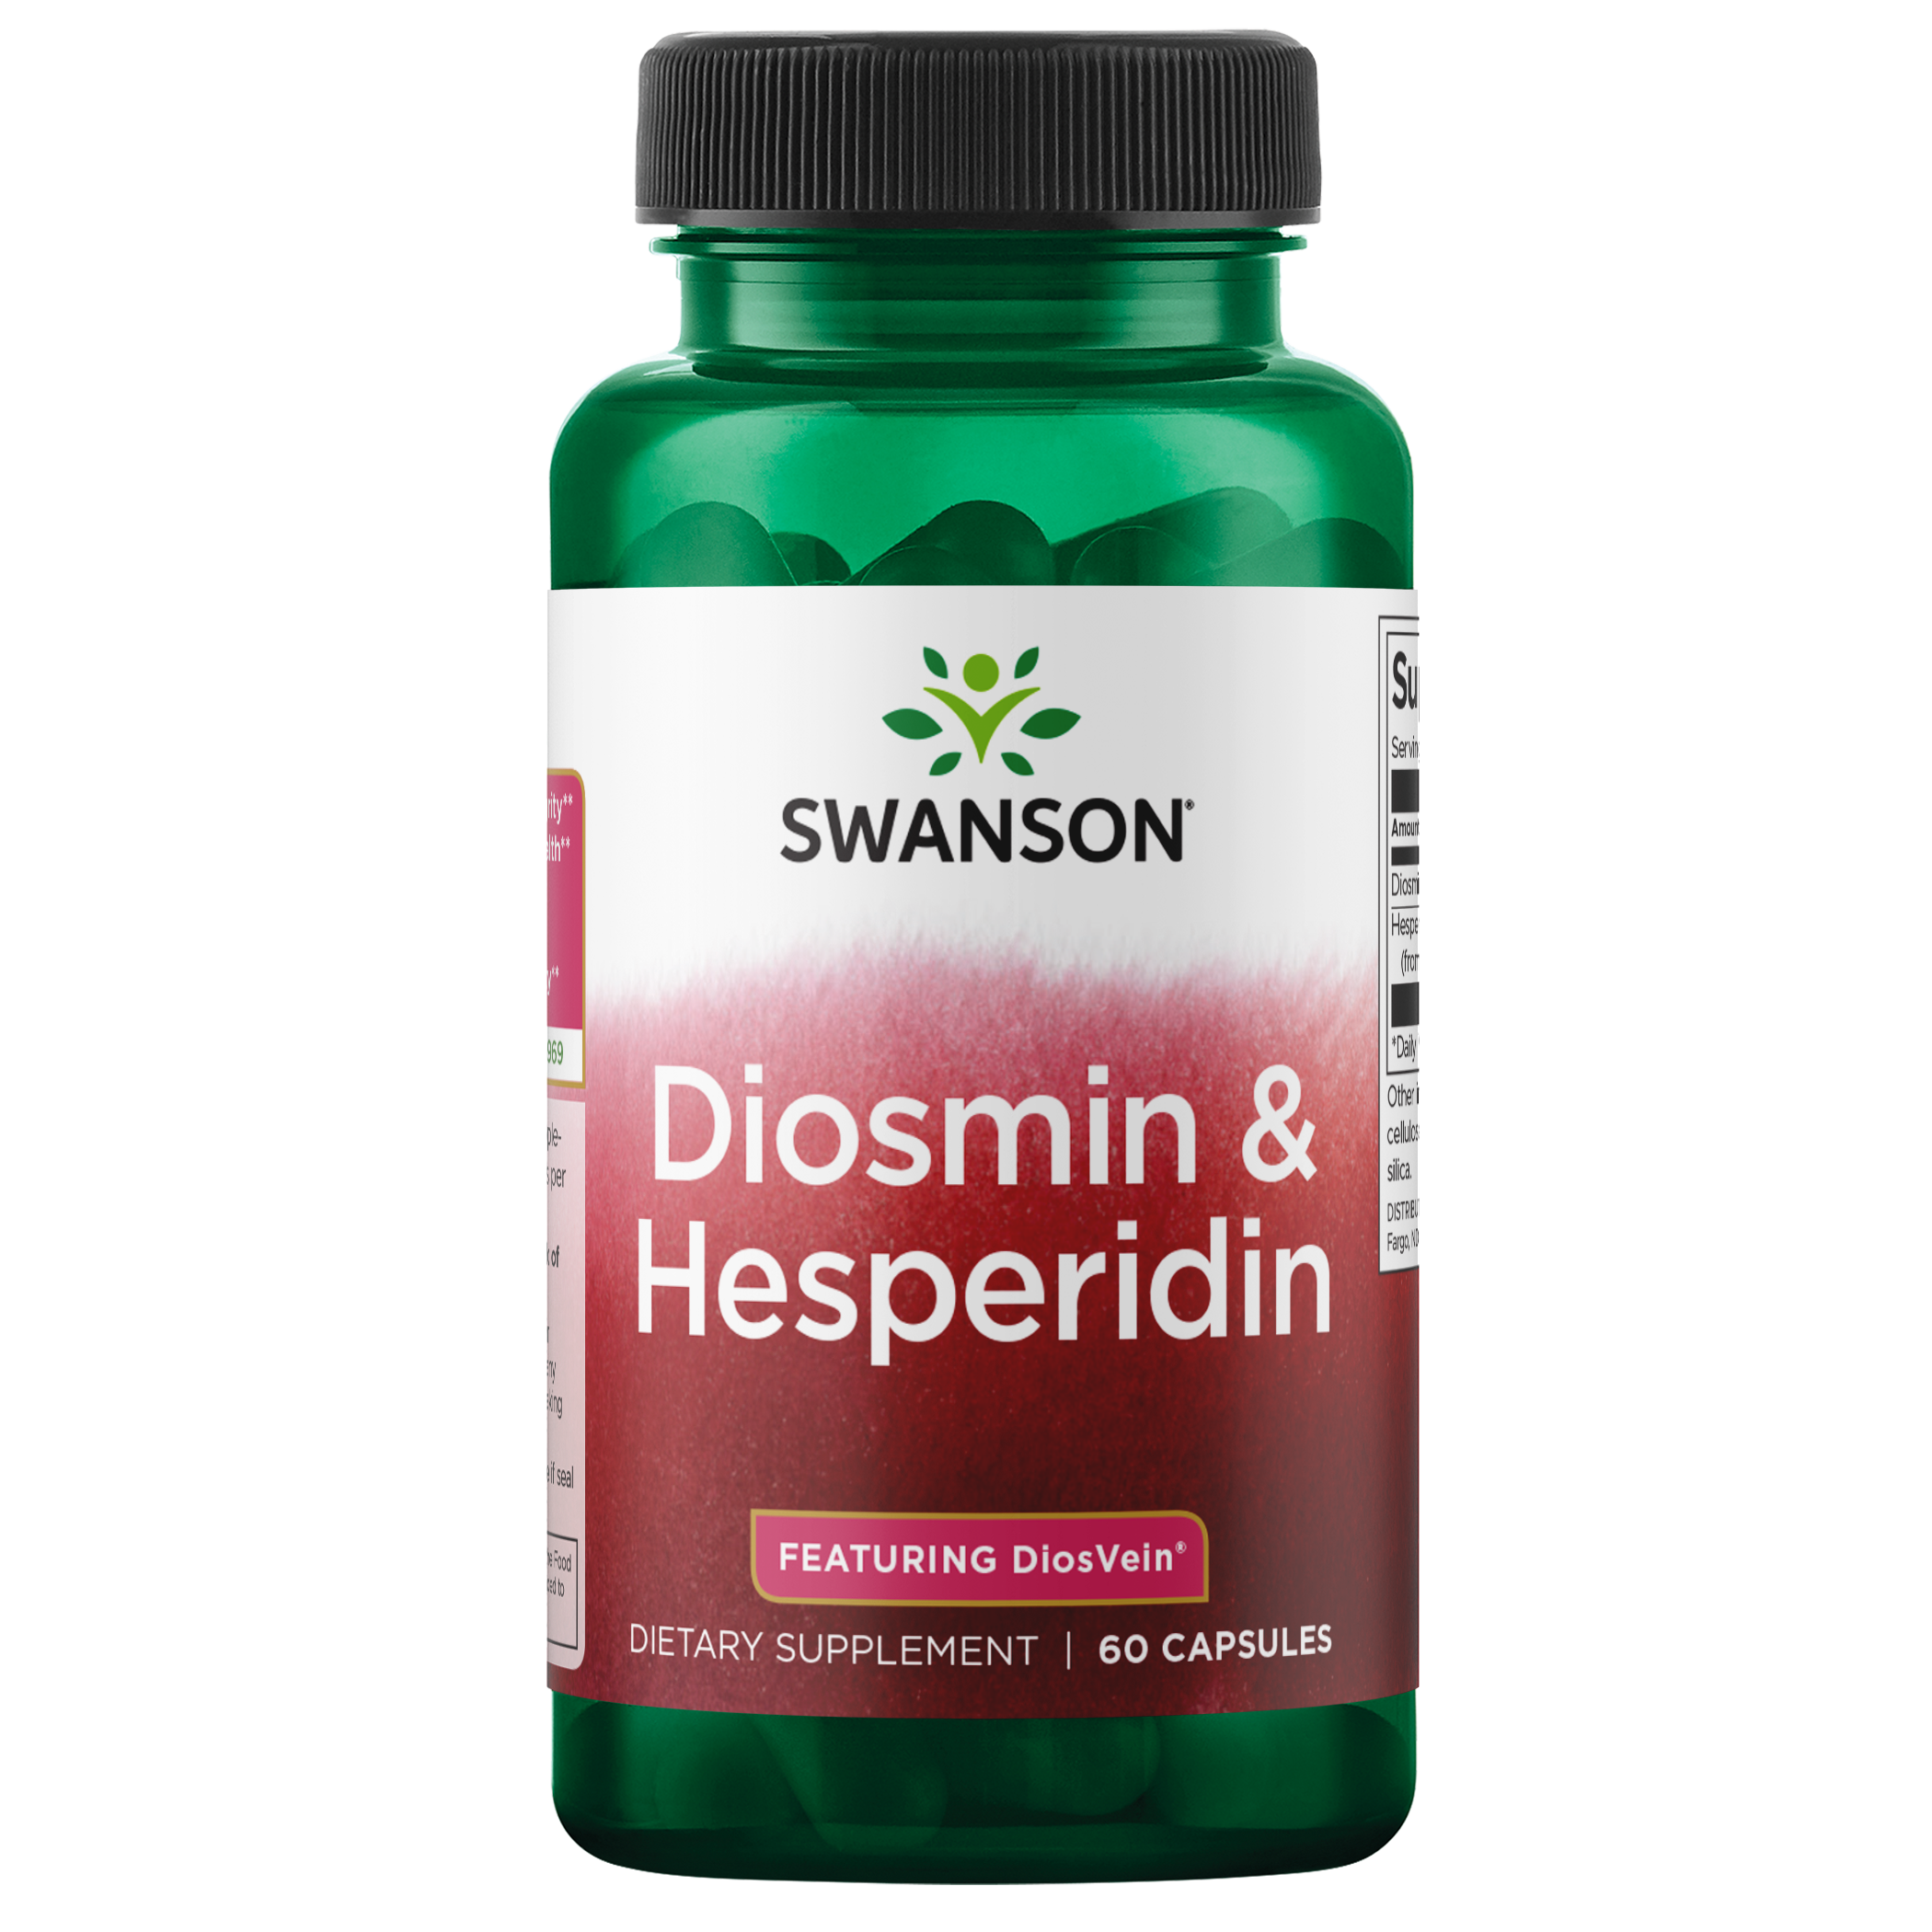 Swanson Ultra Diosmin & Hesperidin - Featuring Diosvein Vitamin 60 Caps